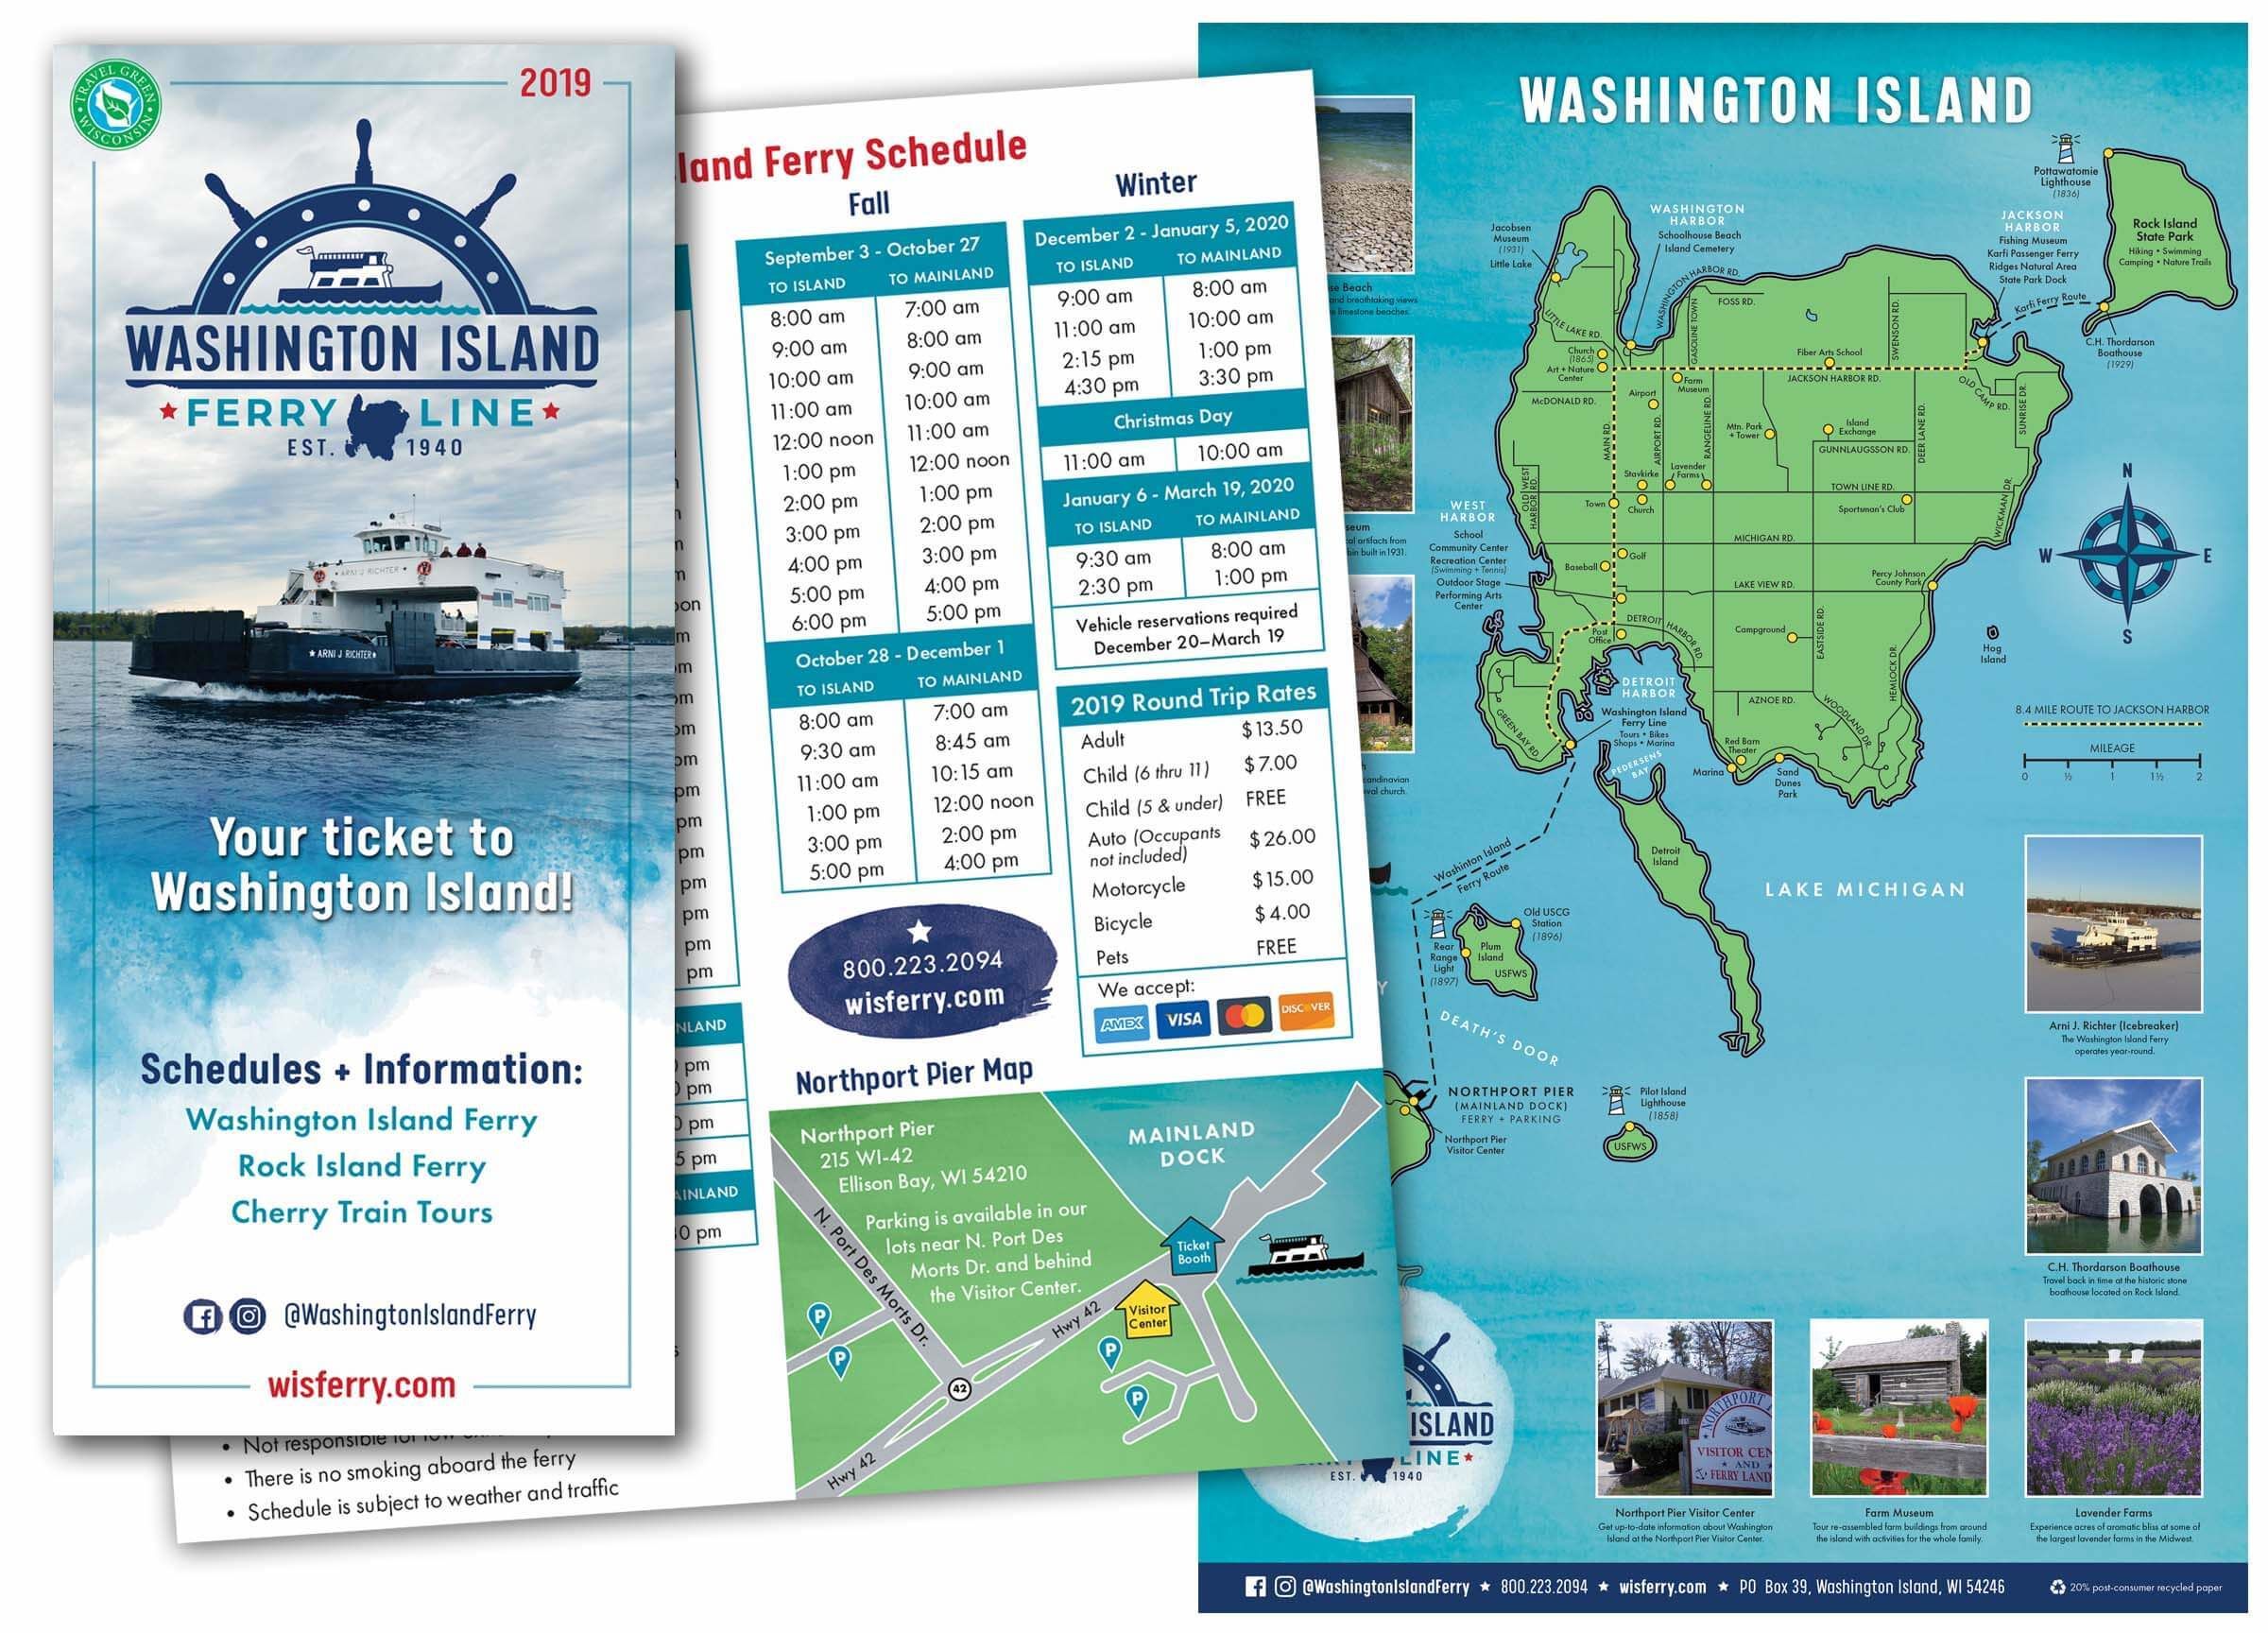 Custom travel brochure design for Washington Island Ferry Line